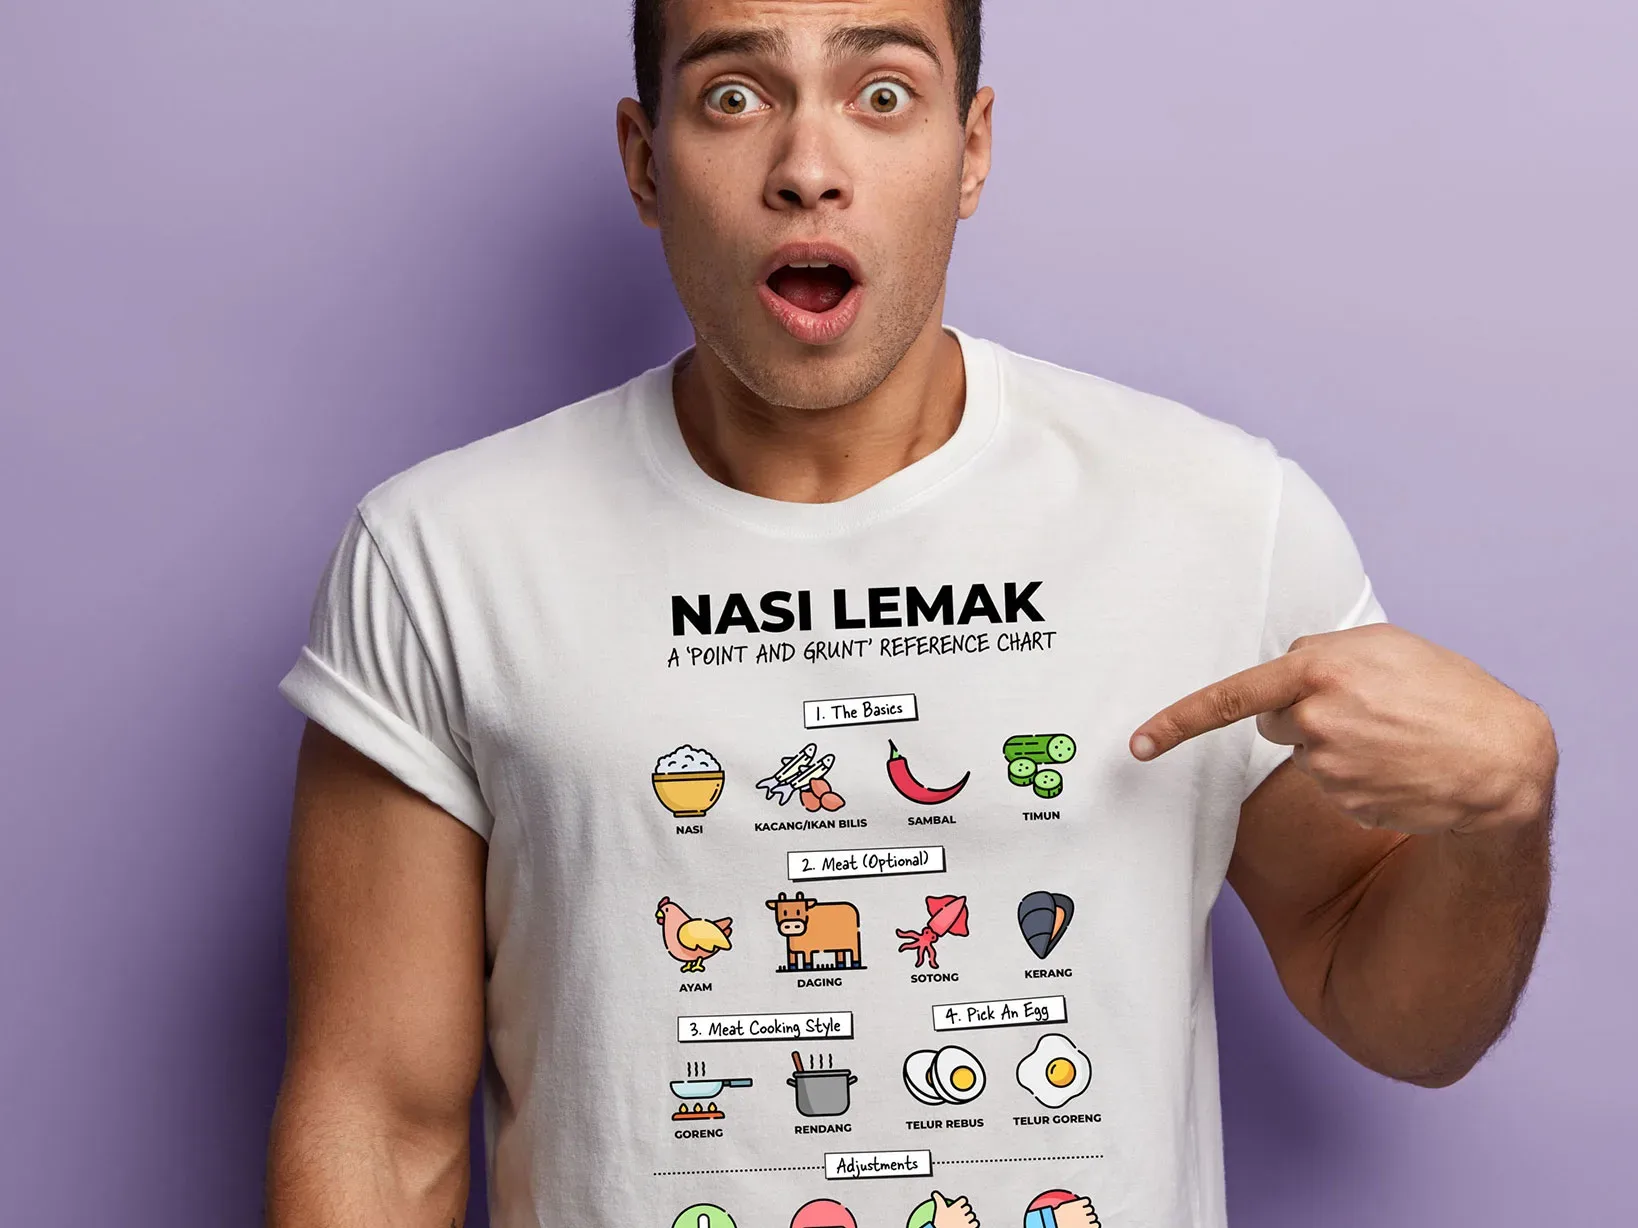 Man pointing at the icons on his nasi lemak ordering shirt.